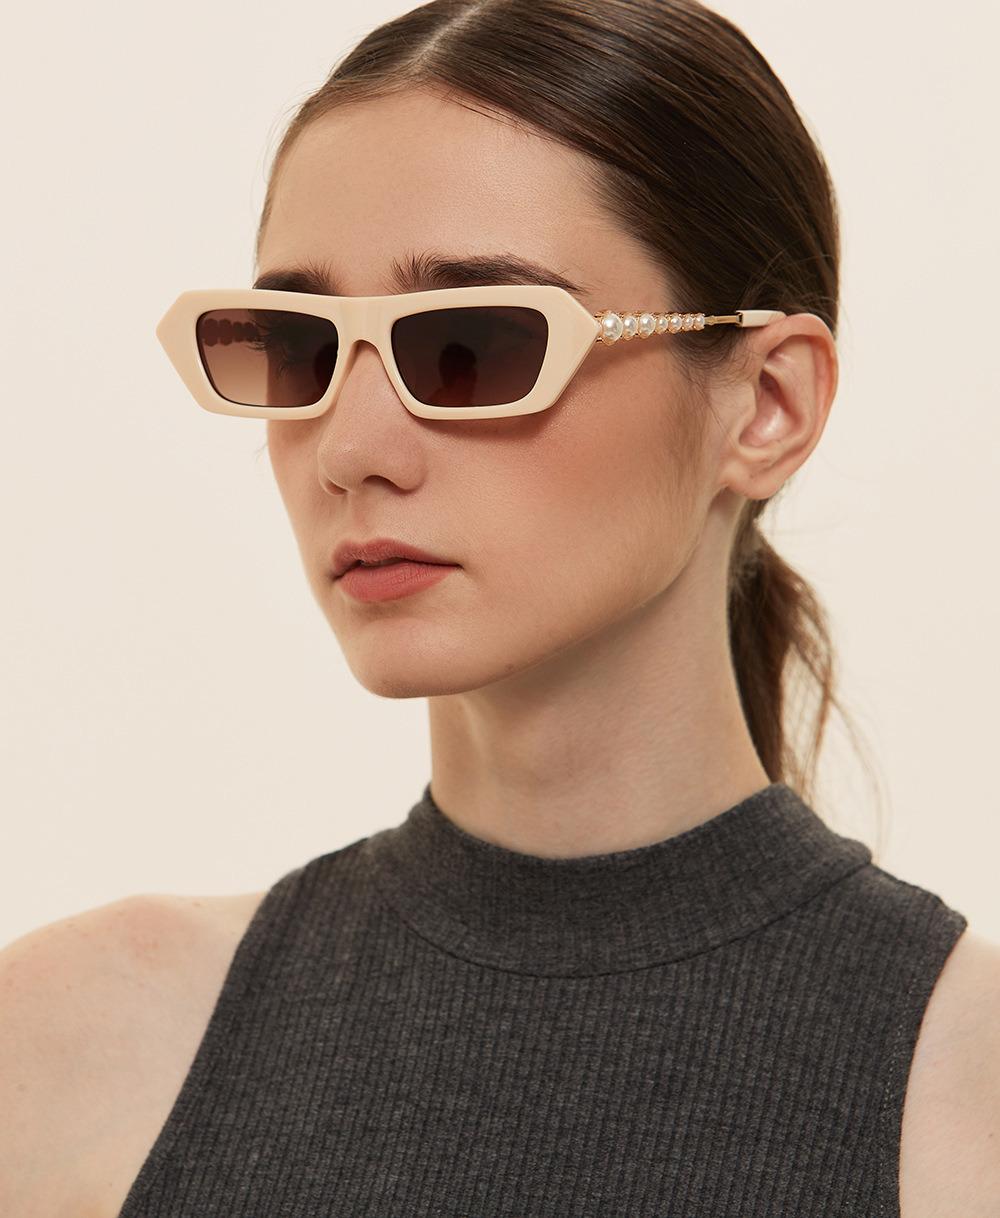 Fashion Stylish PC Half Metal Frames Pearl Square Sunglass Mens Vintage Retro Glasses Small Square New Sunglasses for Women